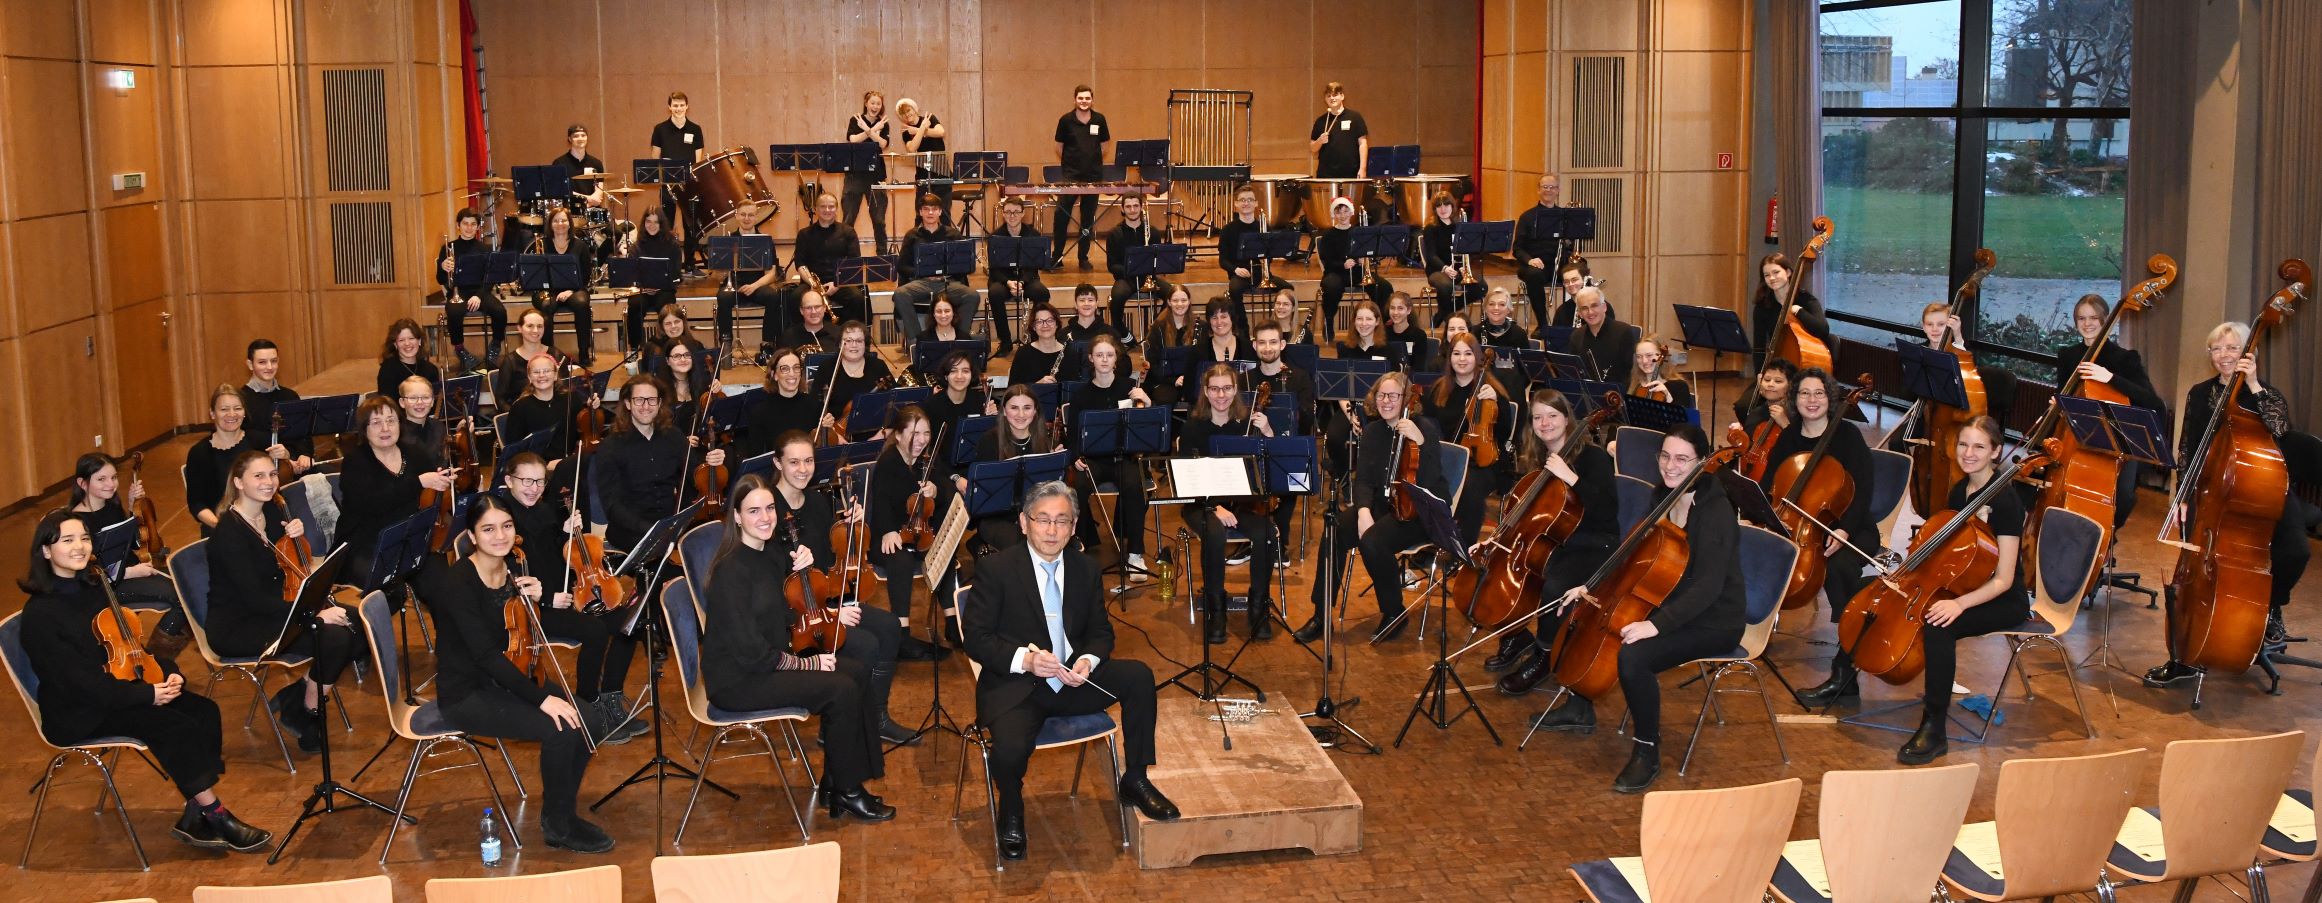 Weihnachtskonzert des Orchesters der Musikschule Leinfelden-Echterdingen